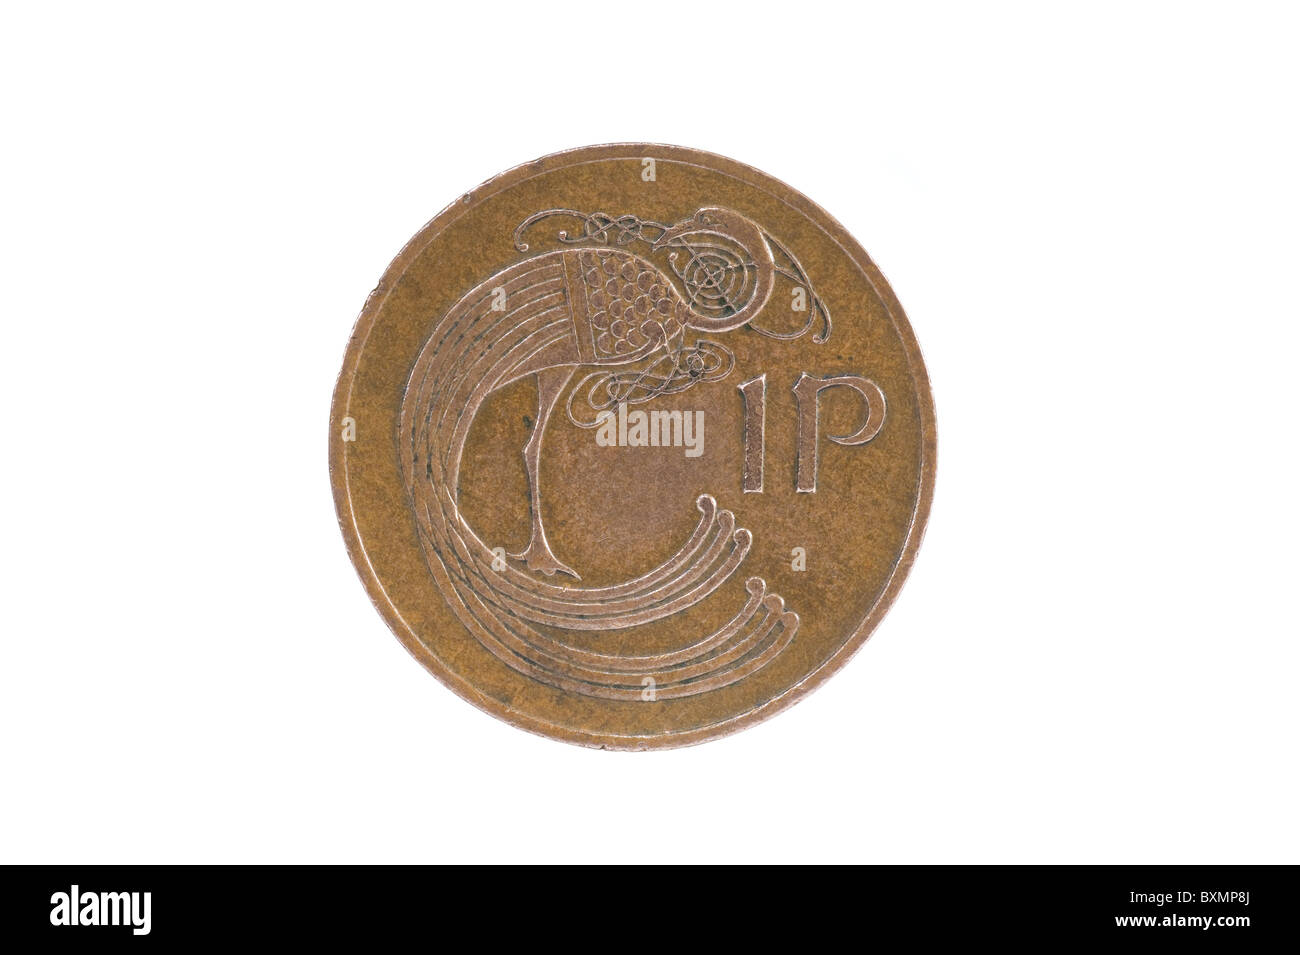 Gaelic peacock design on an old Irish 1 Pence coin Stock Photo